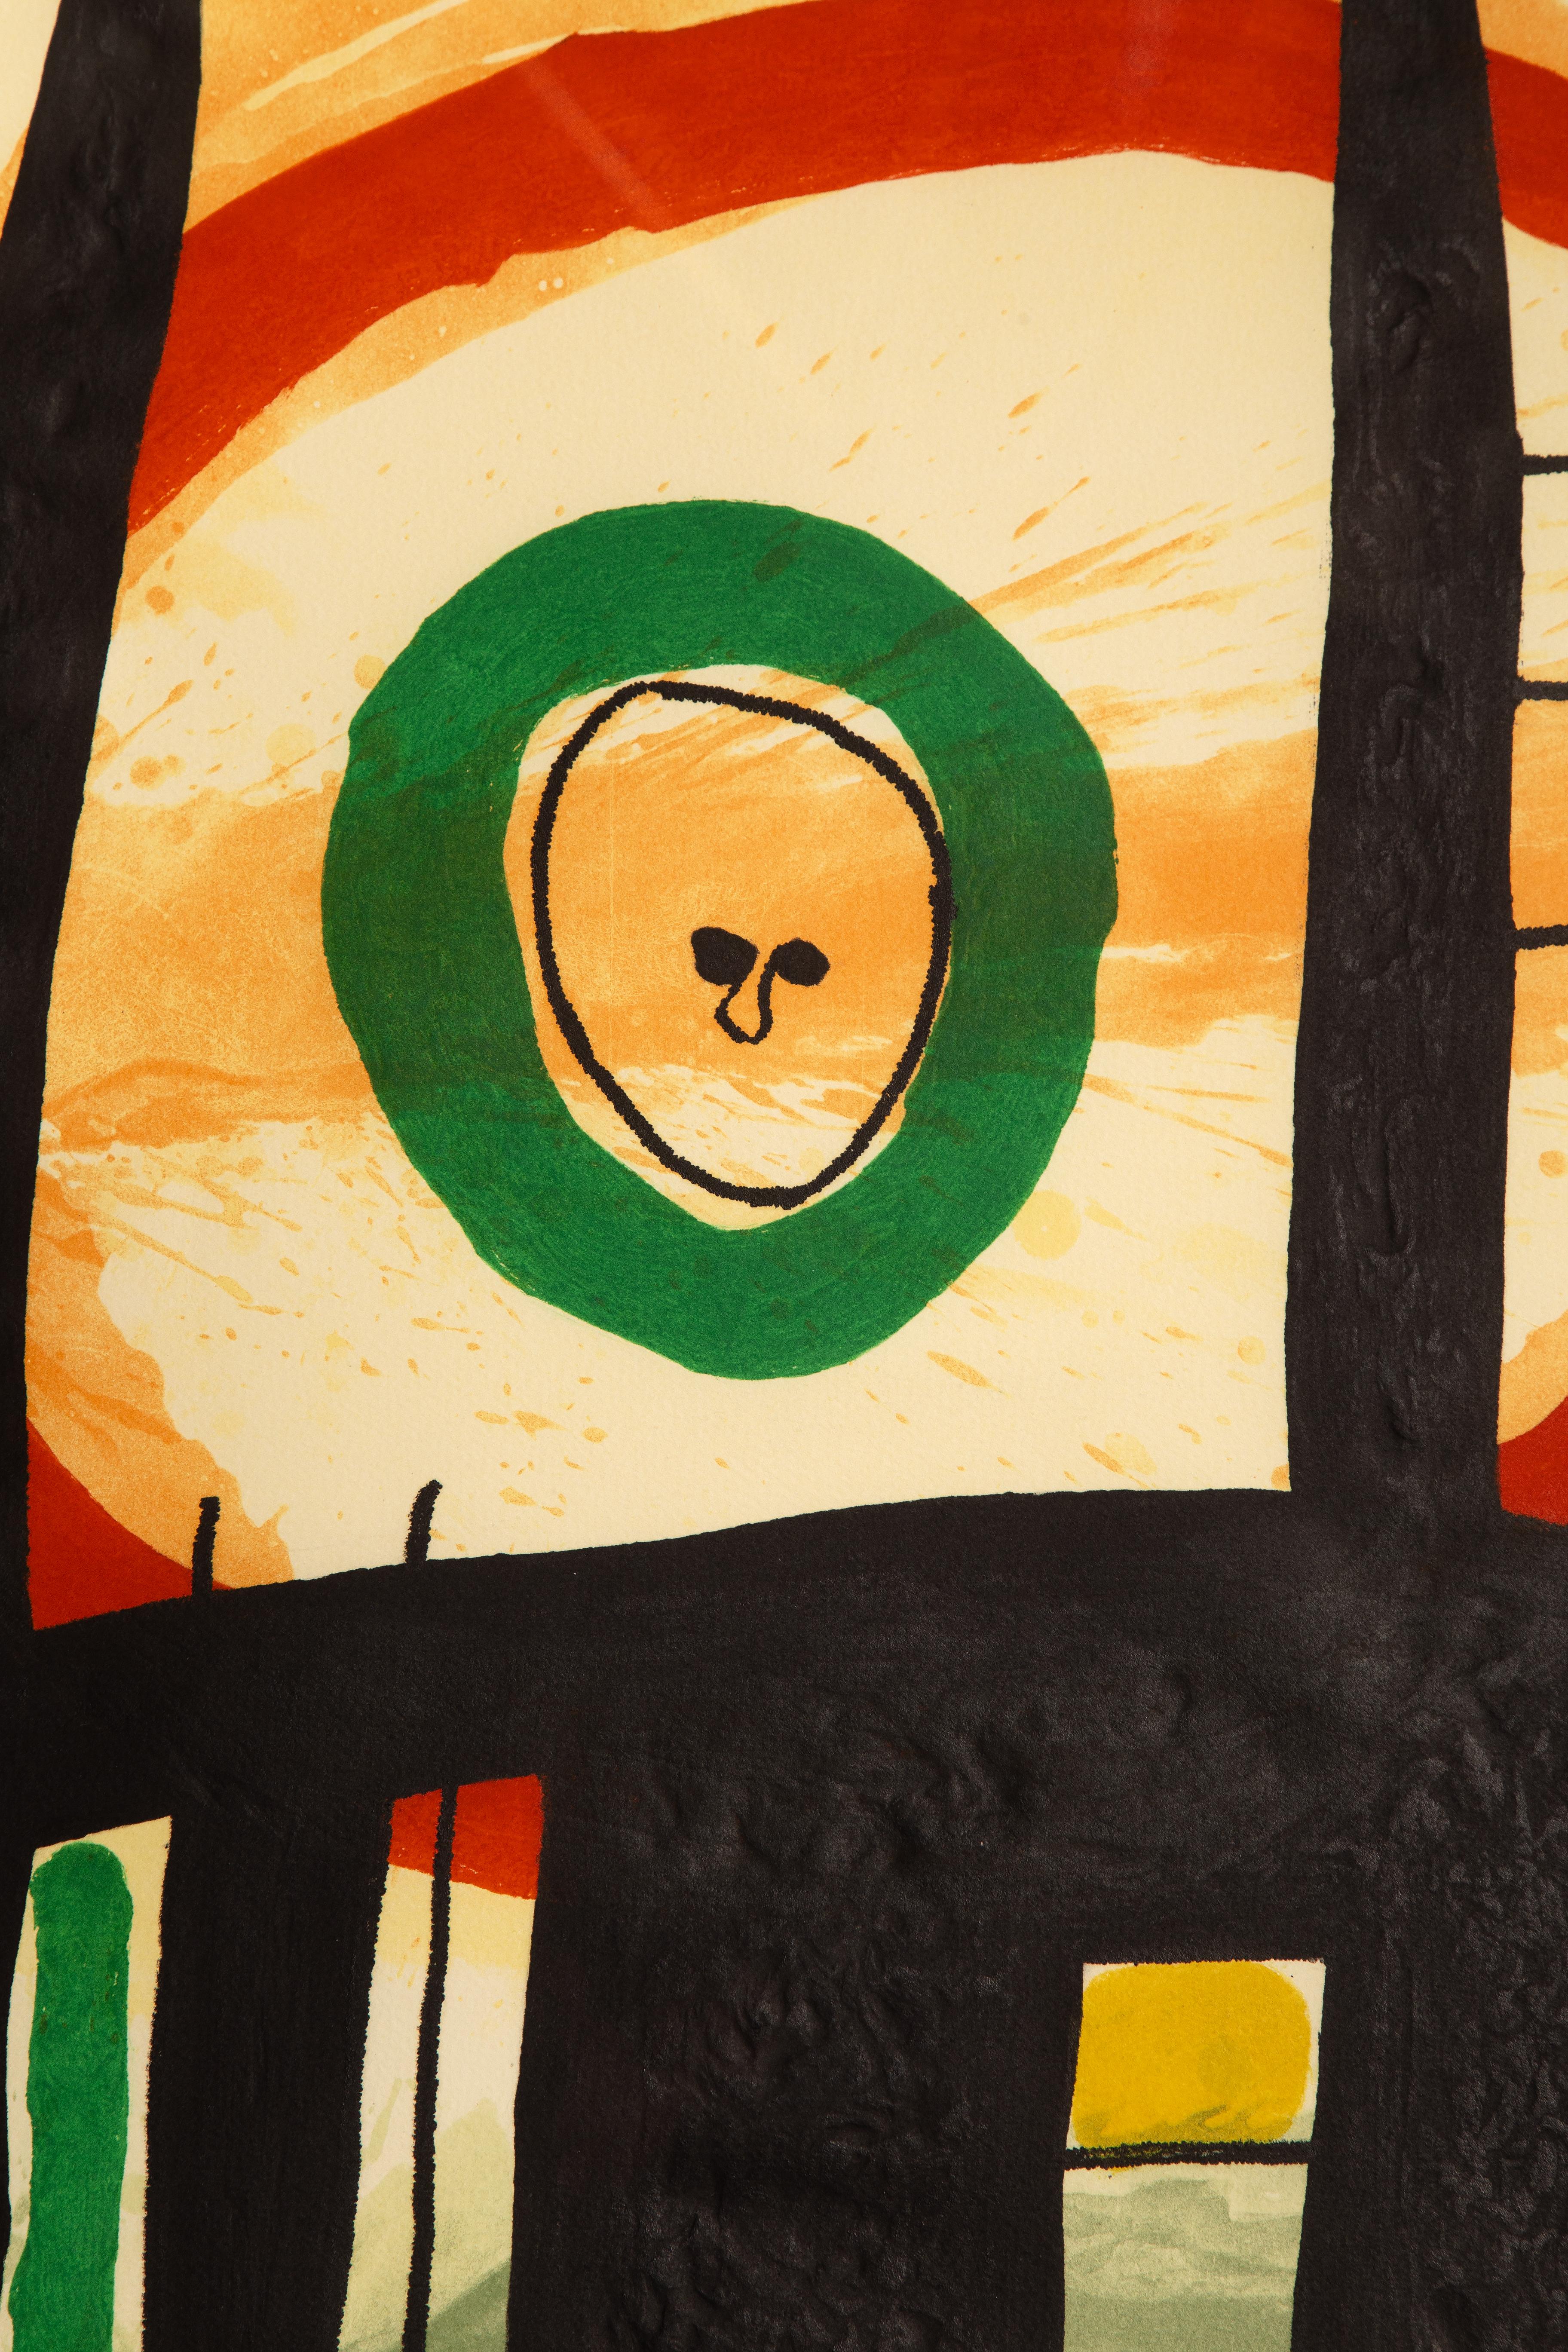 Le Grand Ordonnateur, Etching by Joan Miro 1969 - Print by Joan Miró